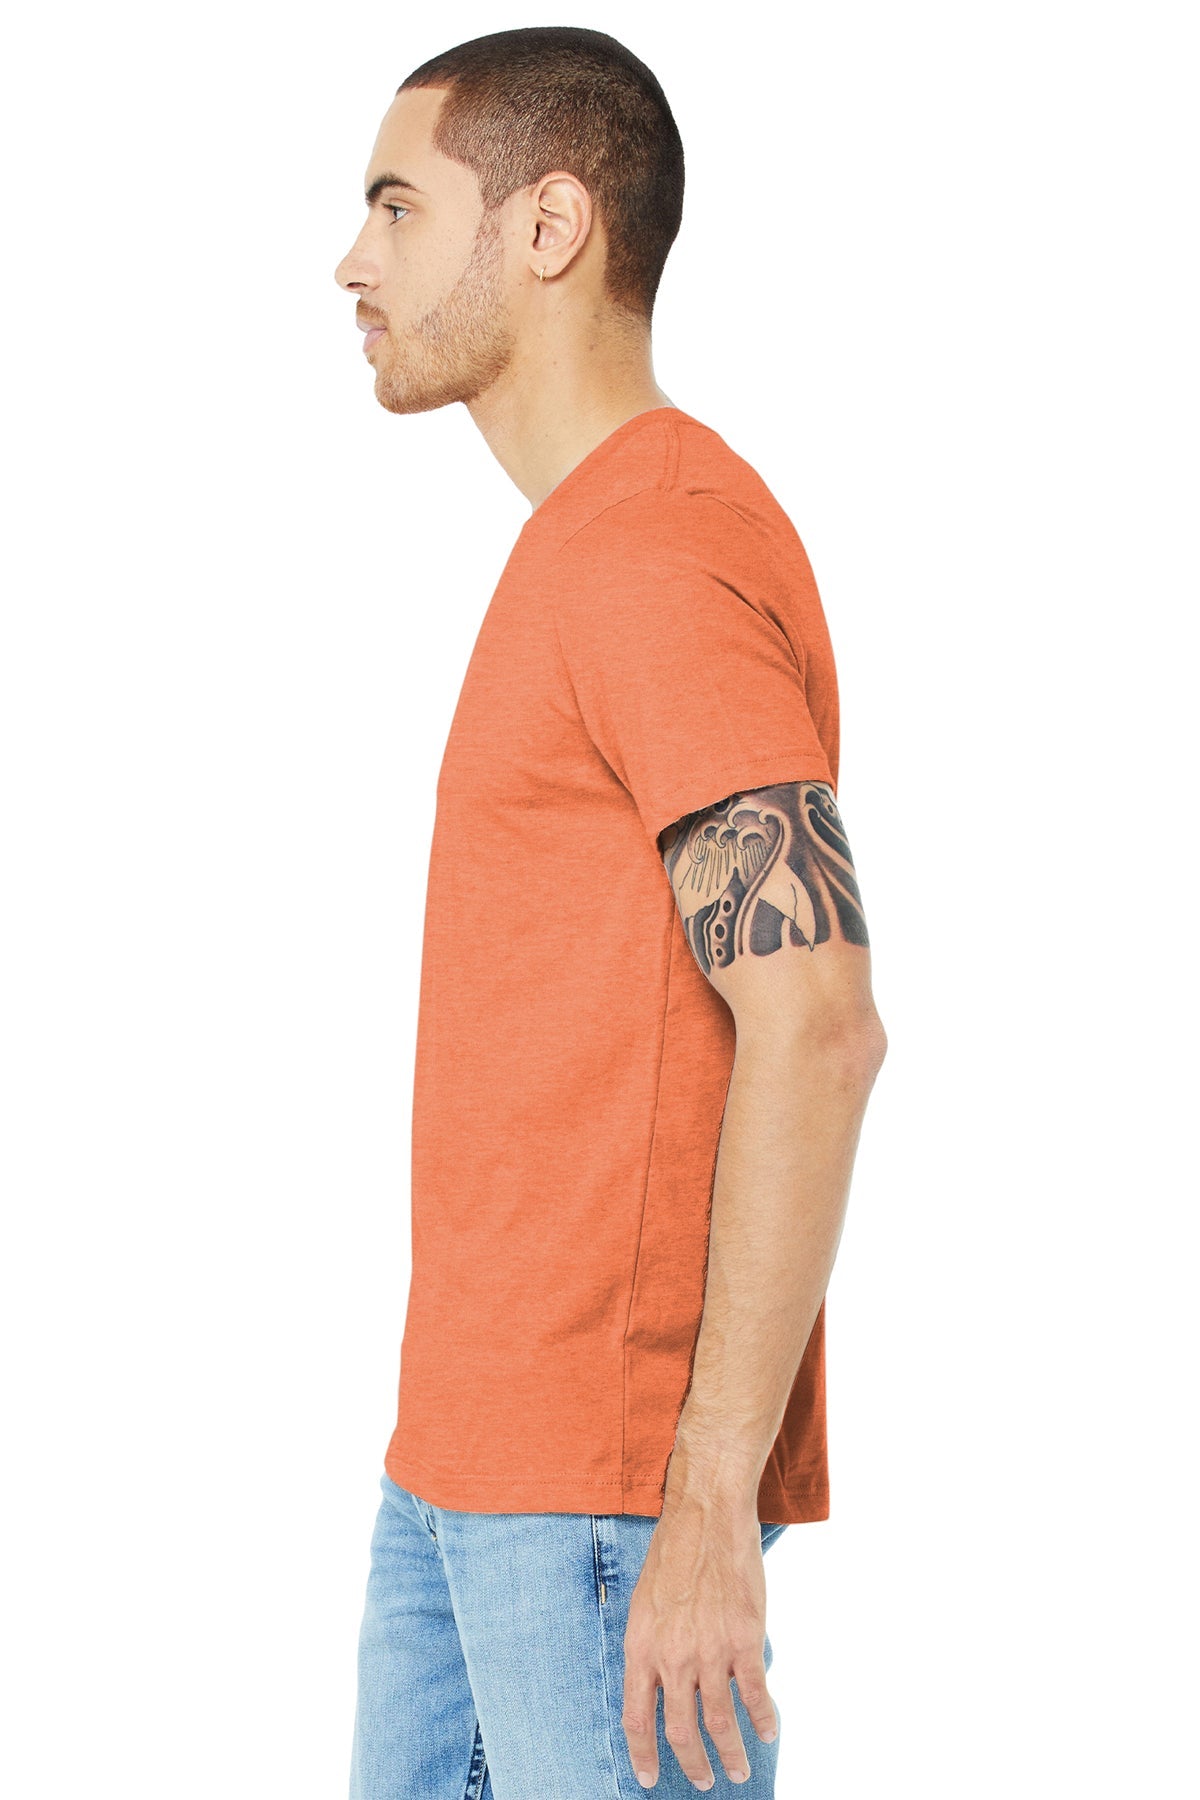 bella + canvas unisex jersey short sleeve t-shirt 3001c heather orange